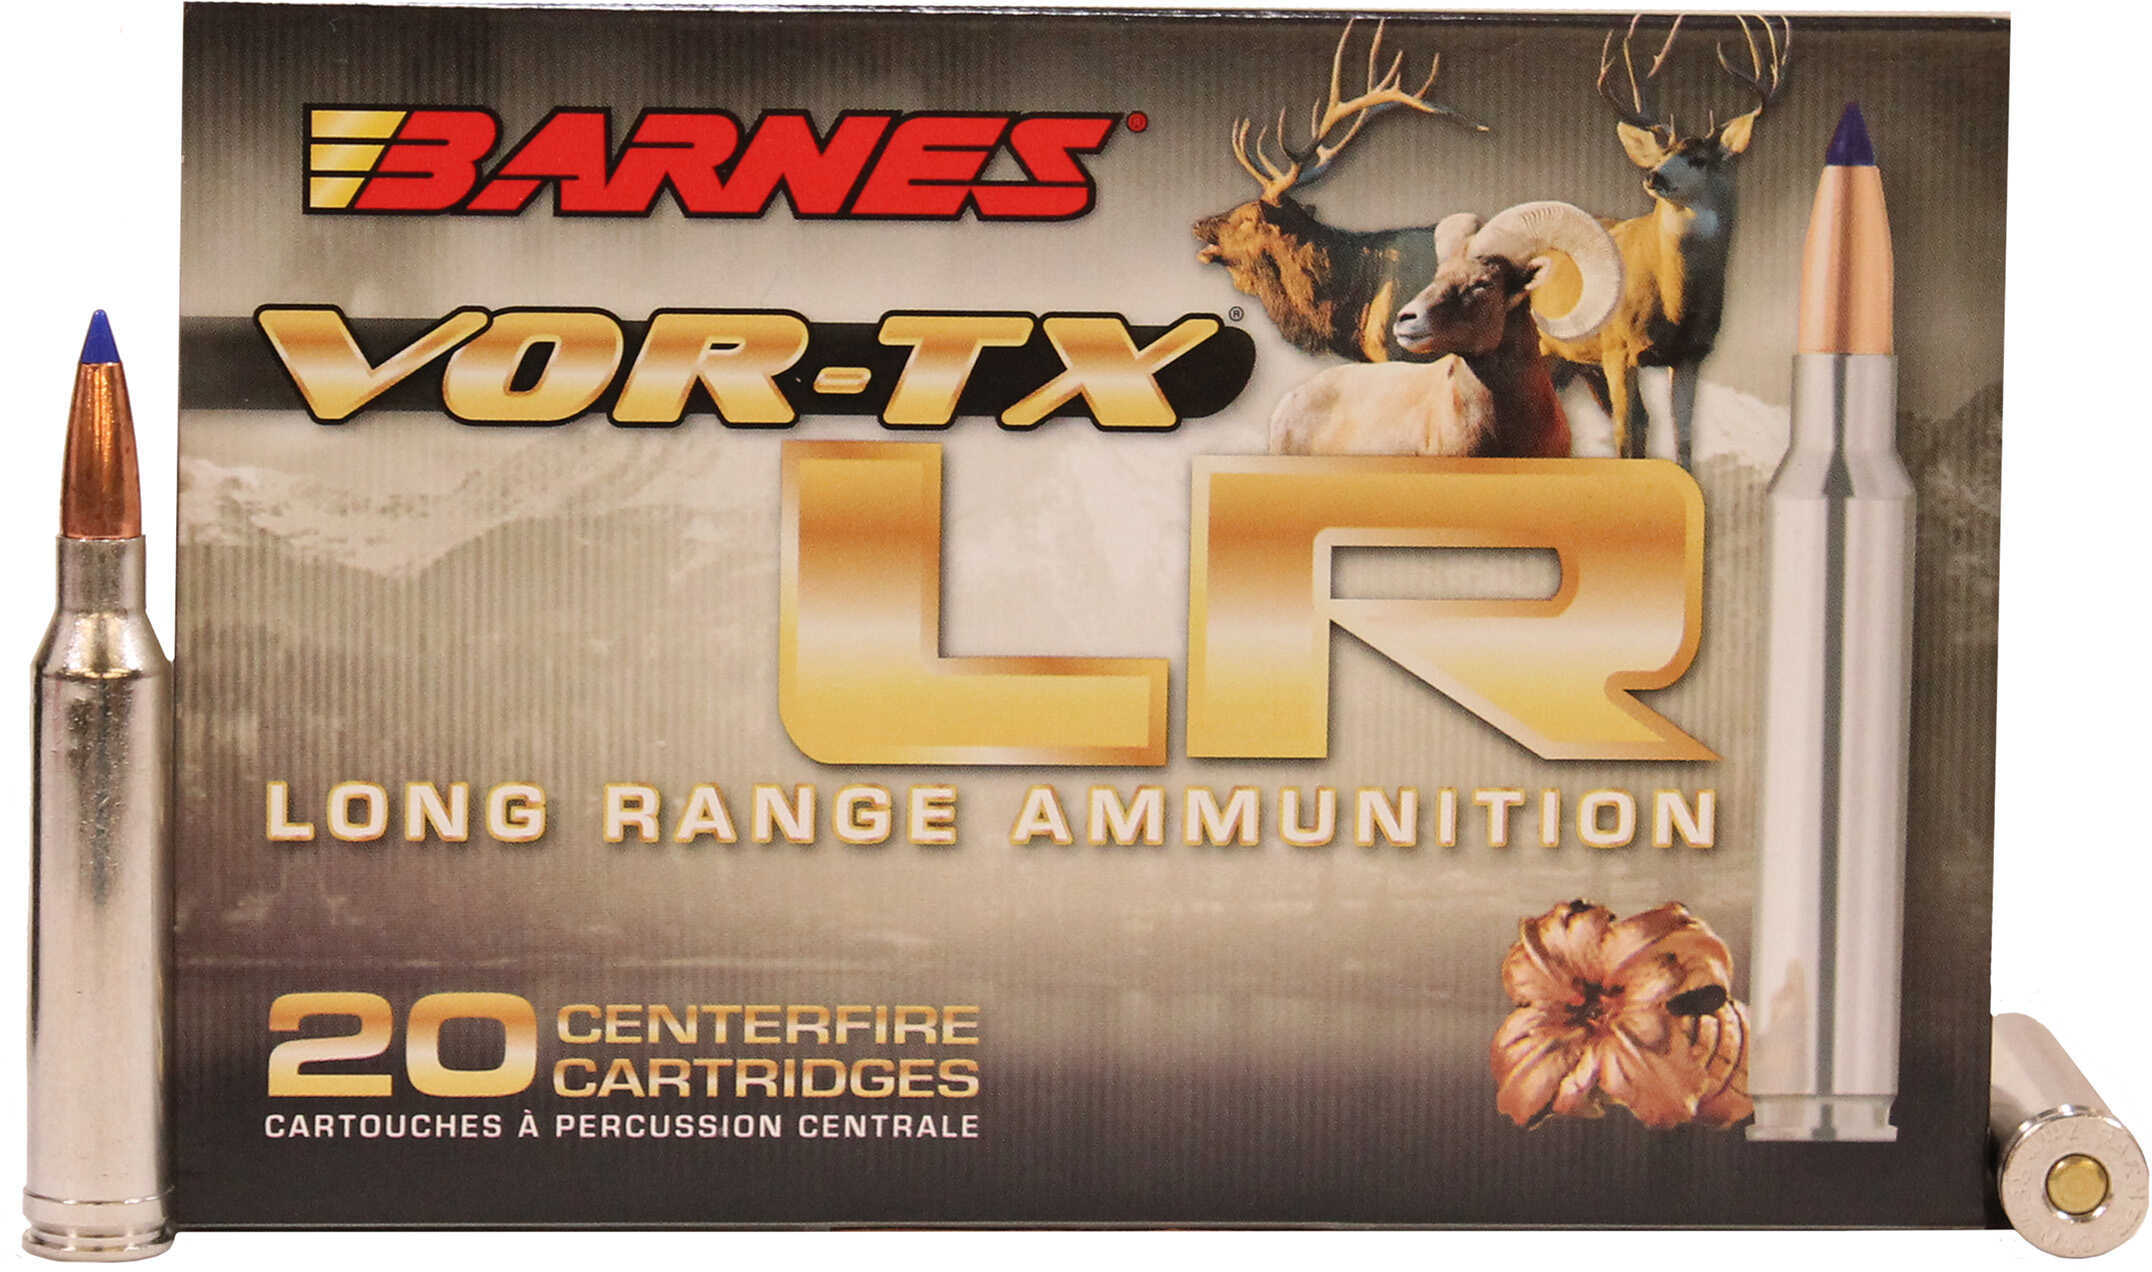 BARNES VOR-TX LR RIFLE AMMO 7mm Rem Mag LRX BT Model: 28981